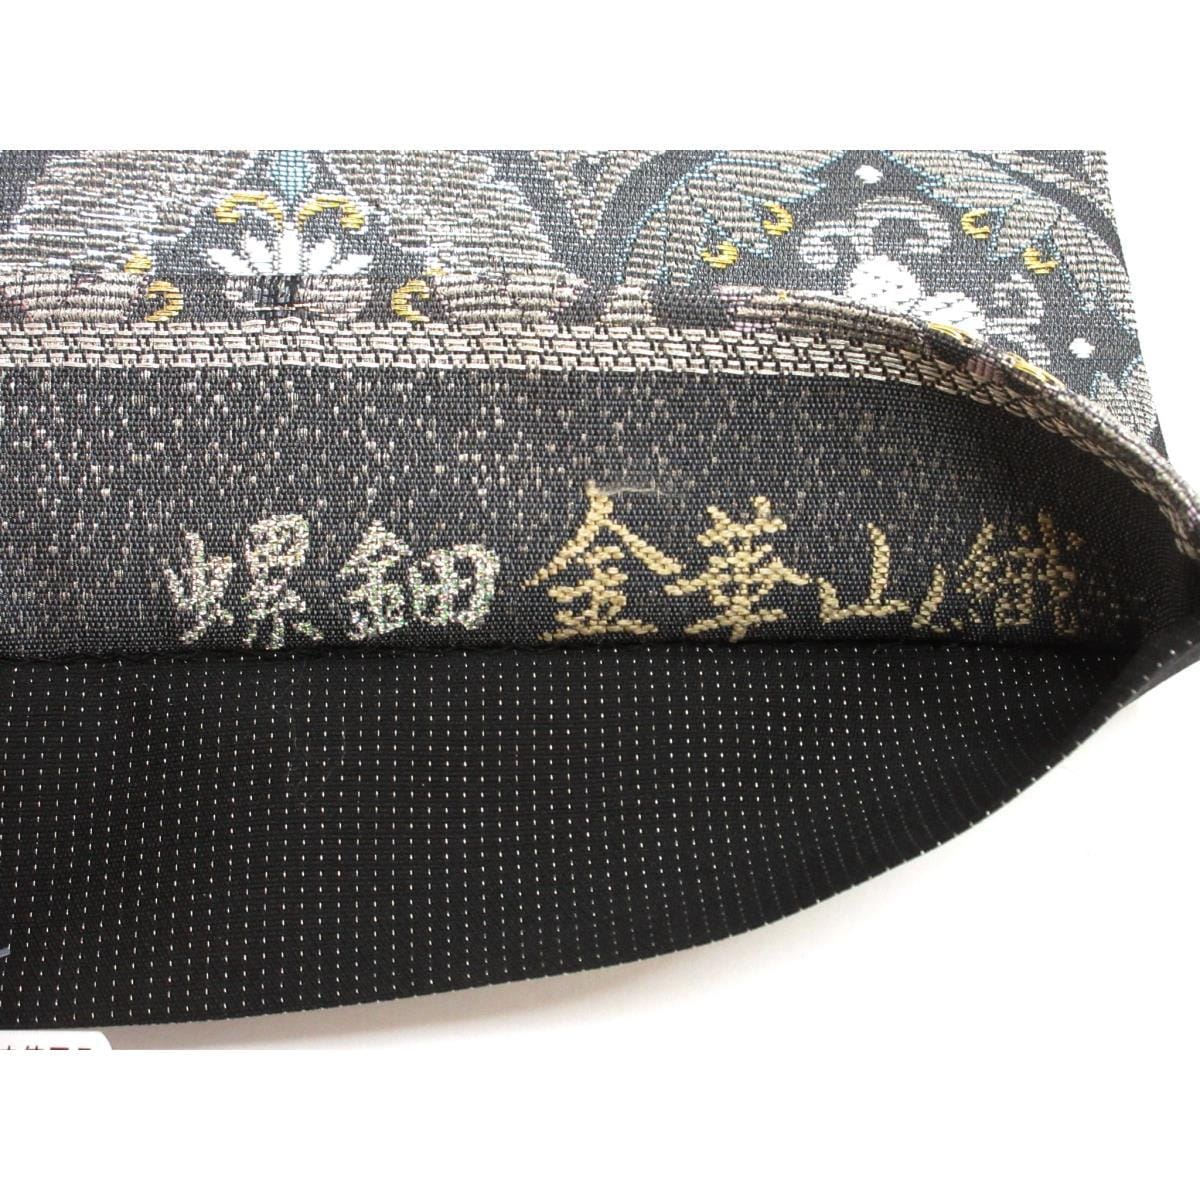 [Unused items] Fukuro obi (belt) Kinkazan weave with mother-of-pearl finish